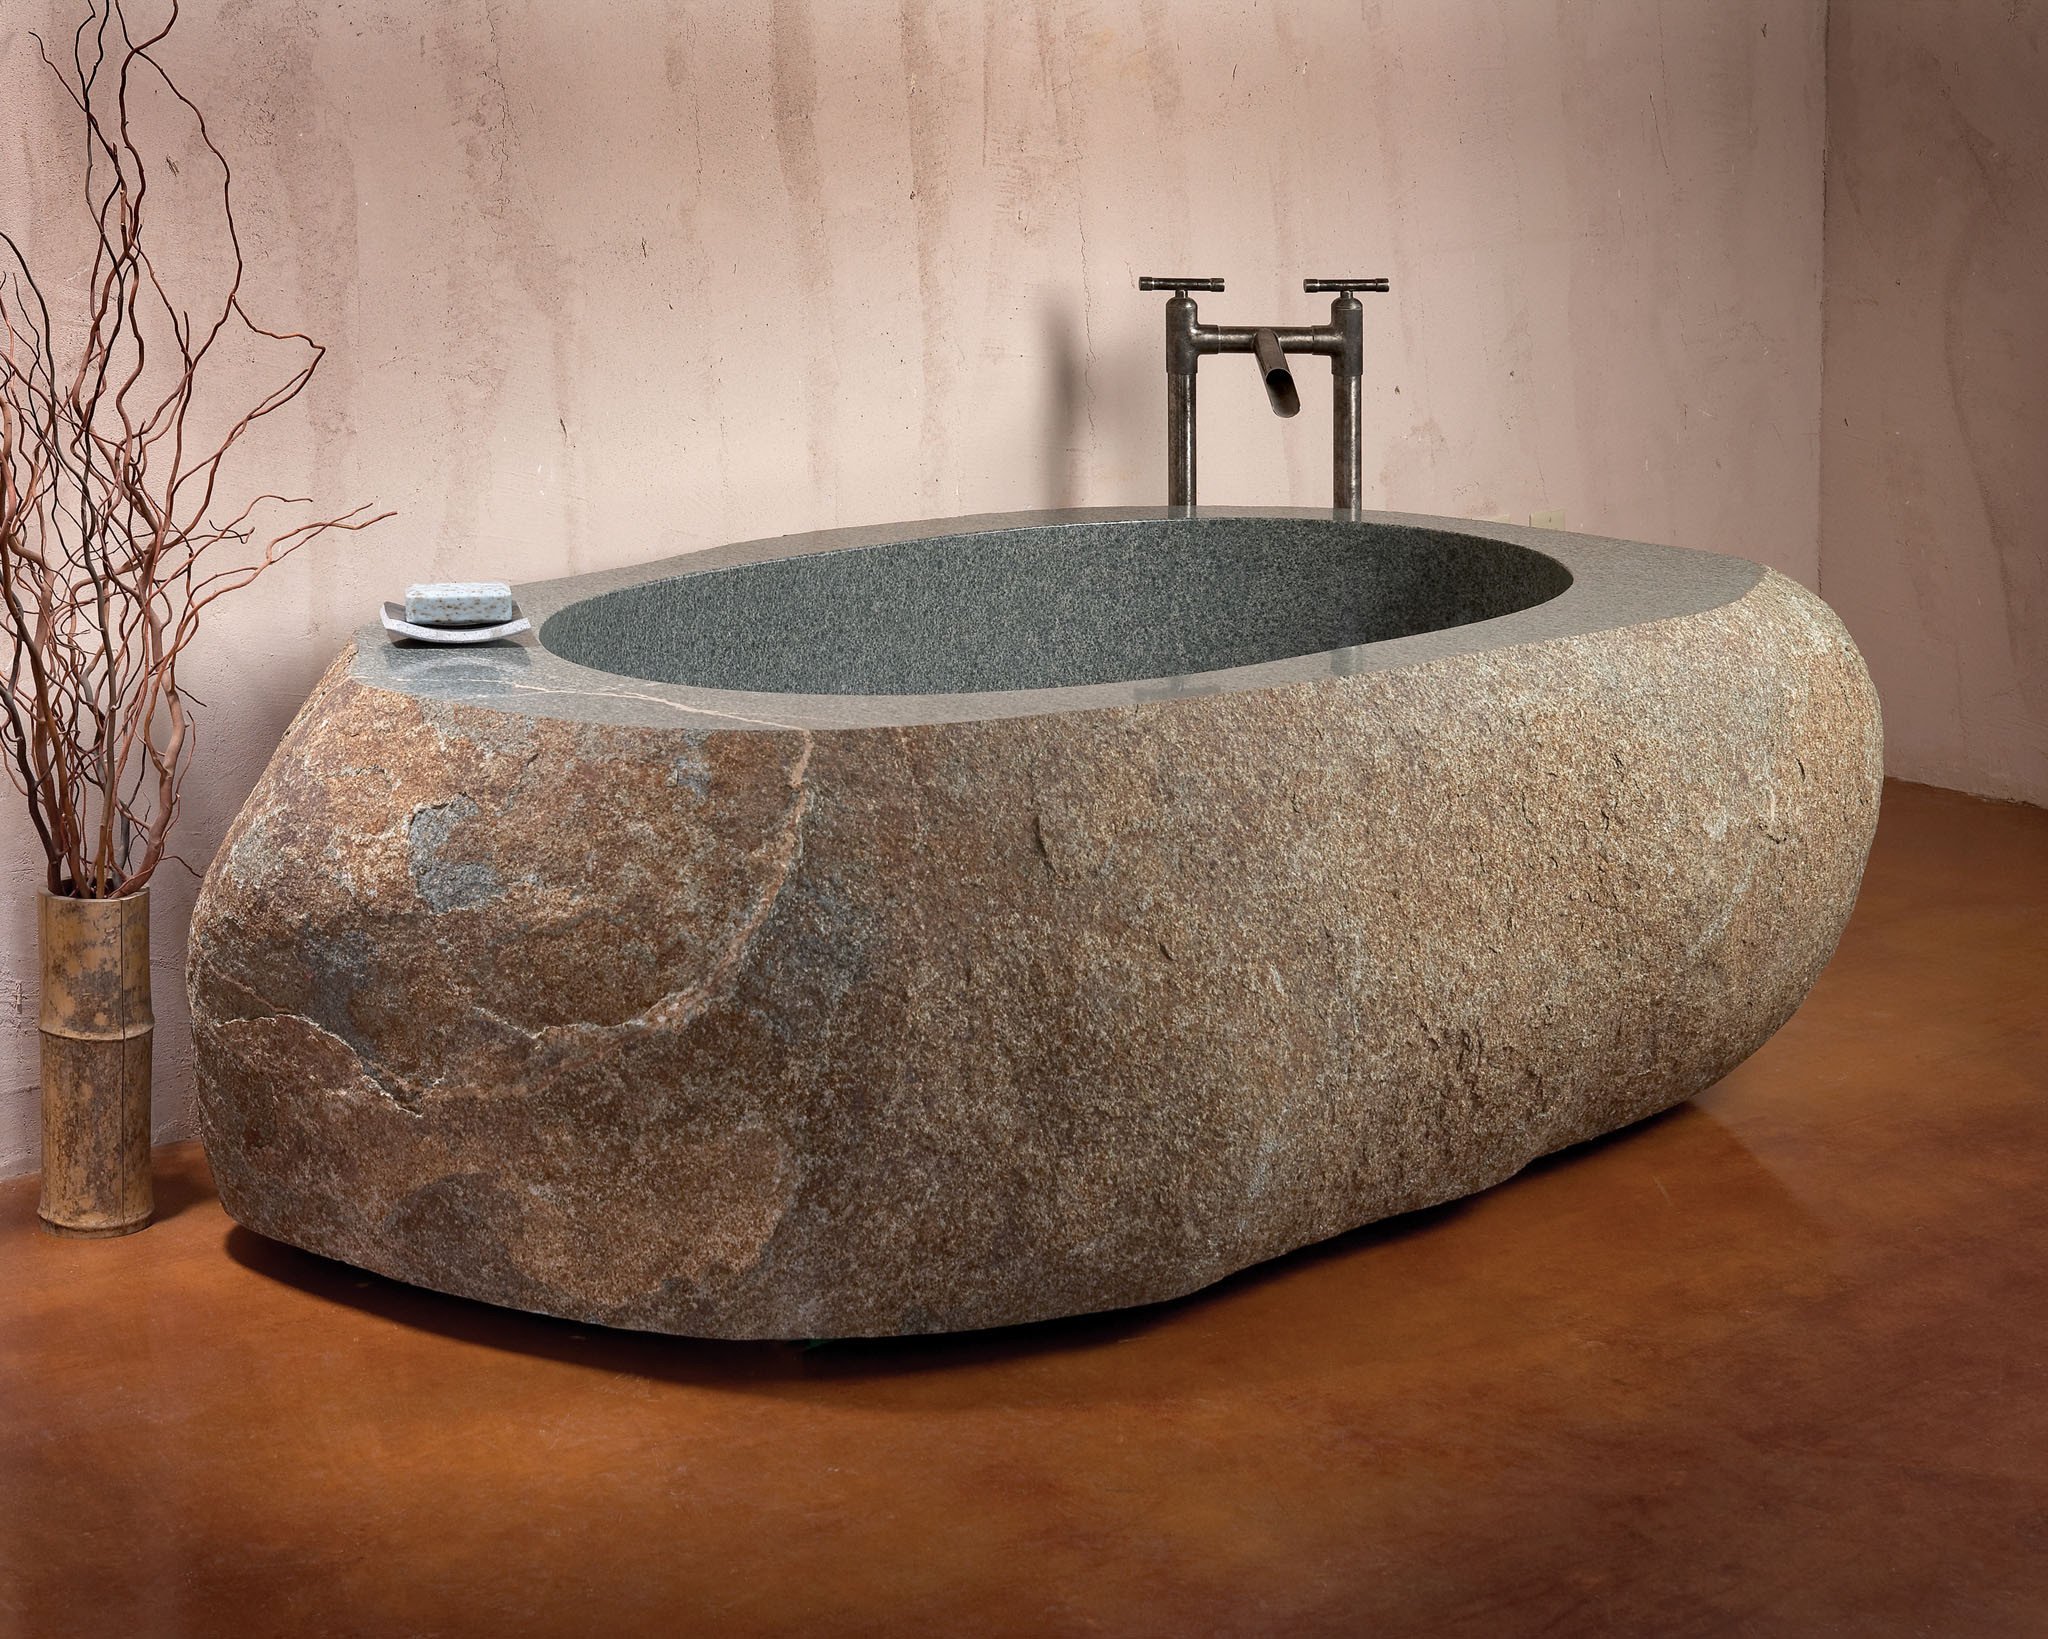 Stone Forest boulder bathtub